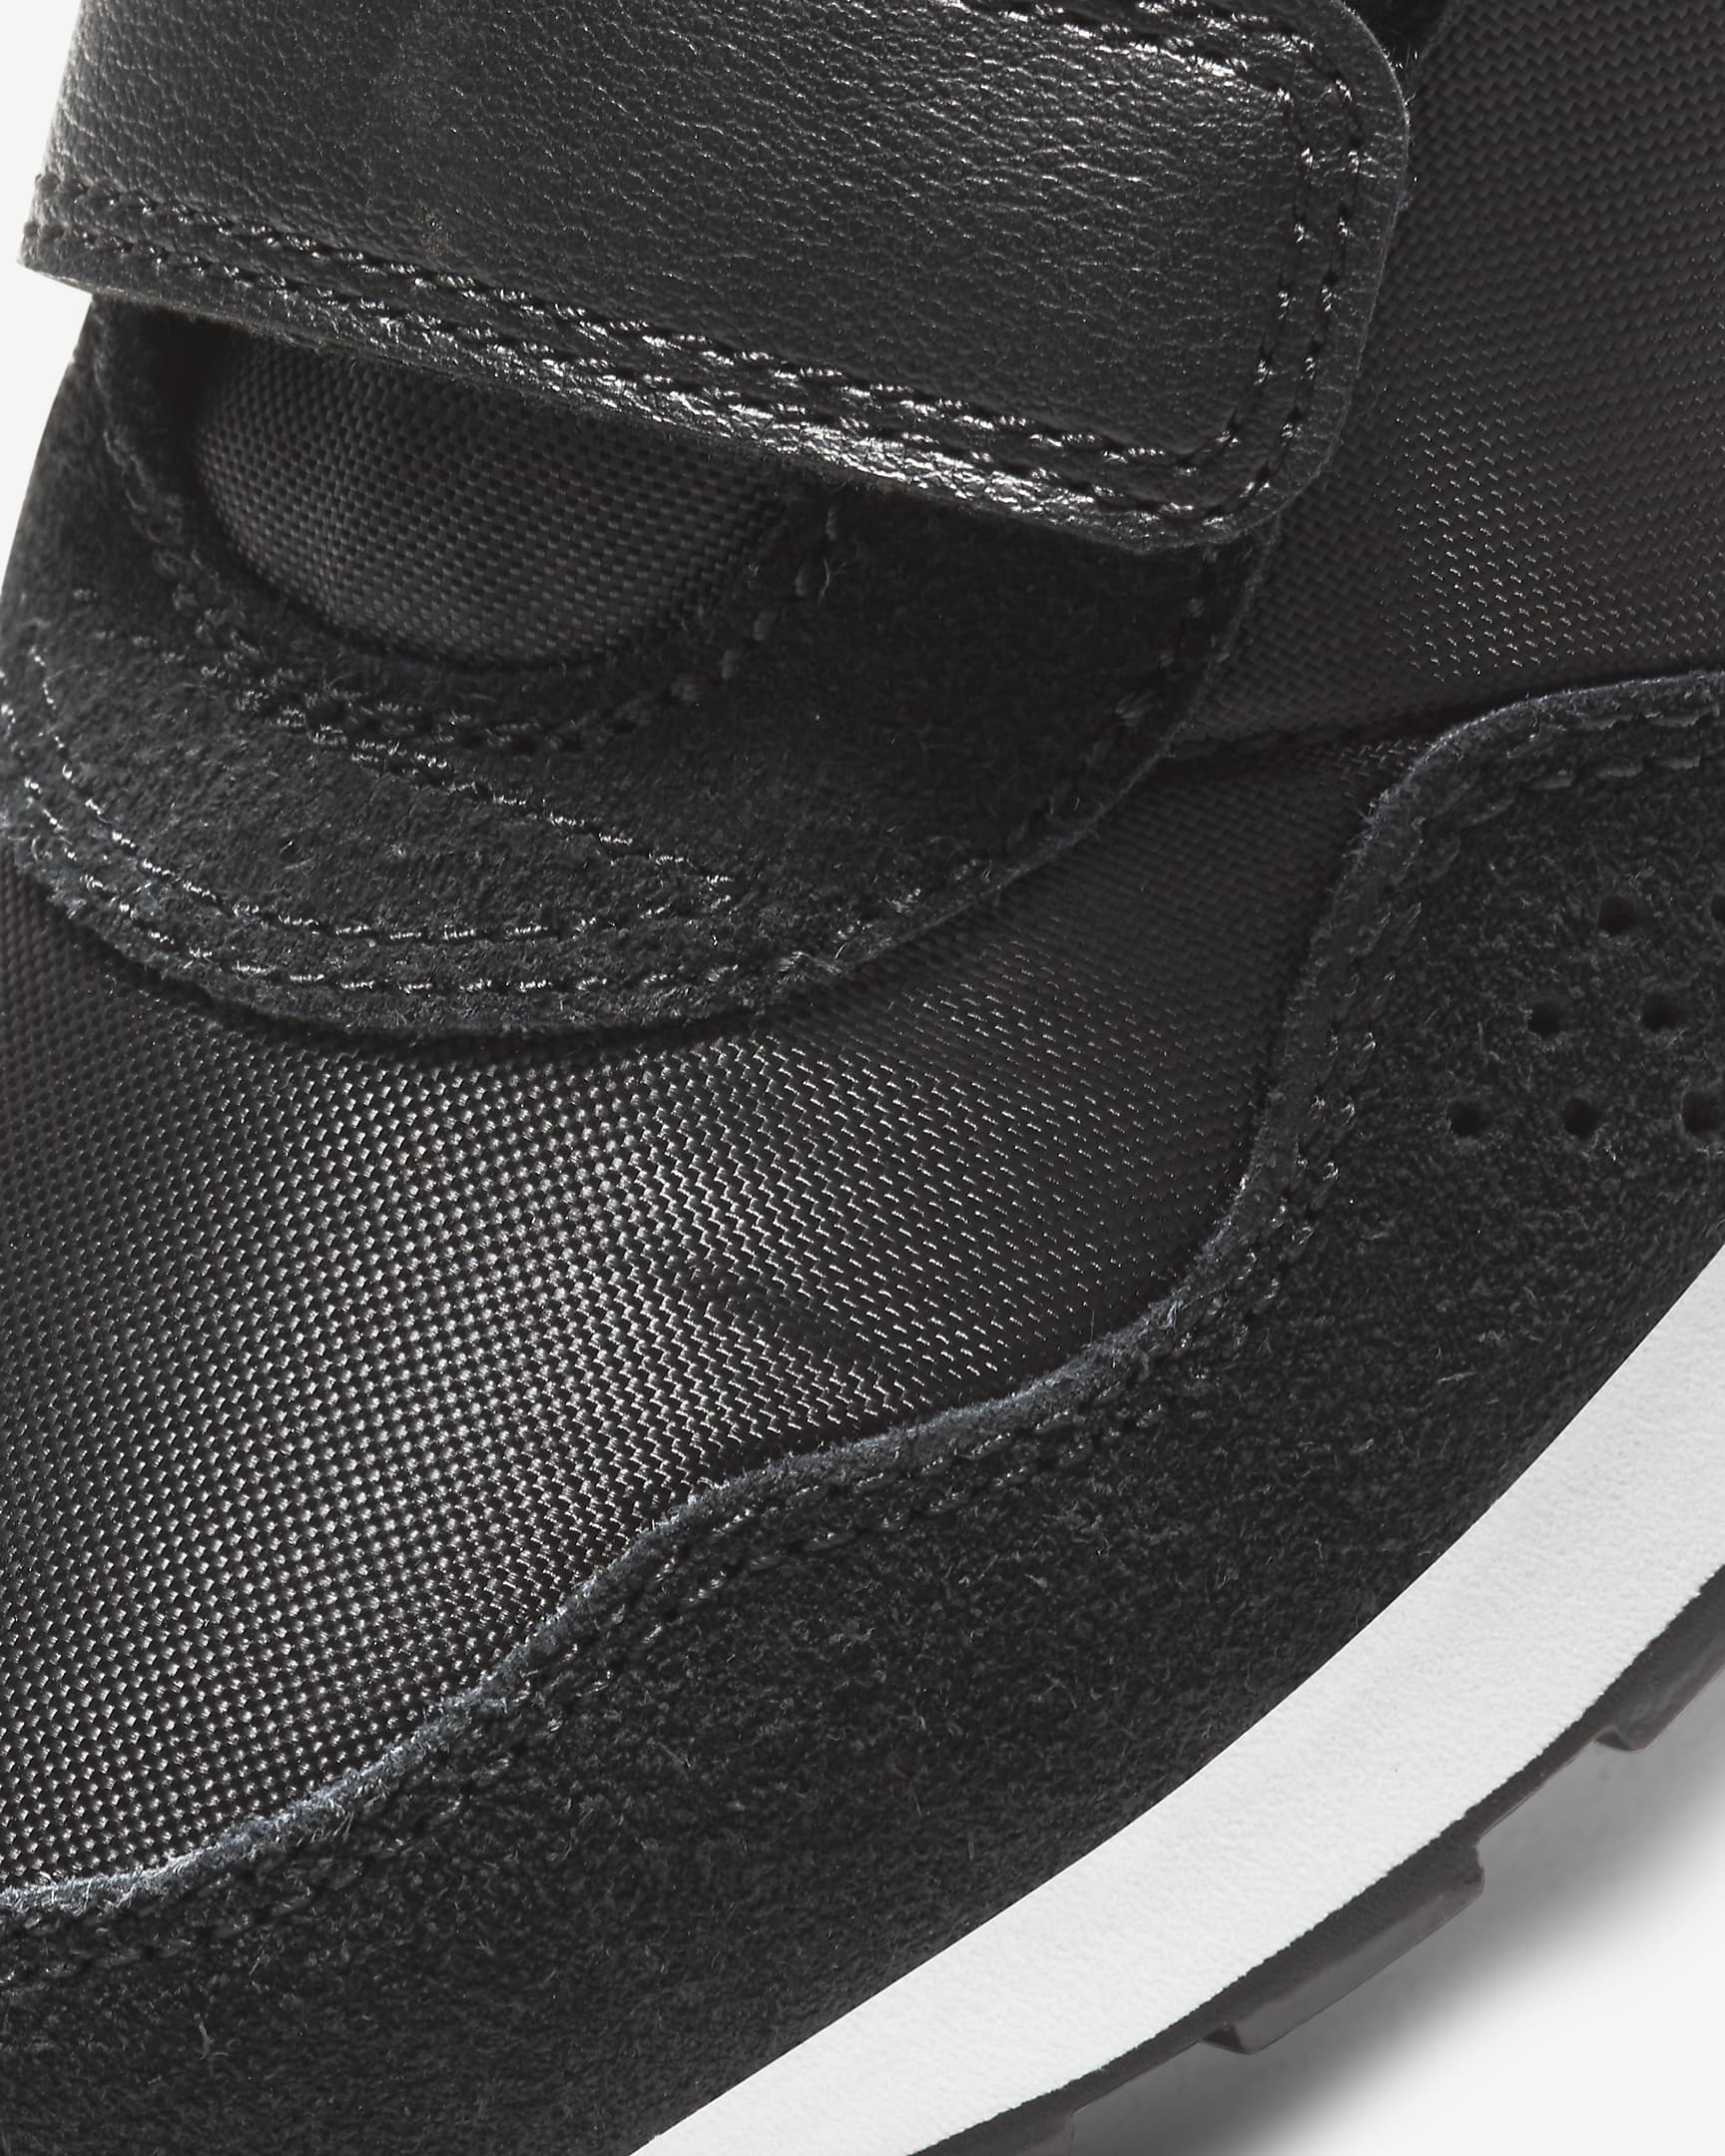 Nike MD Valiant cipő kisebb gyerekeknek - Fekete/Fehér